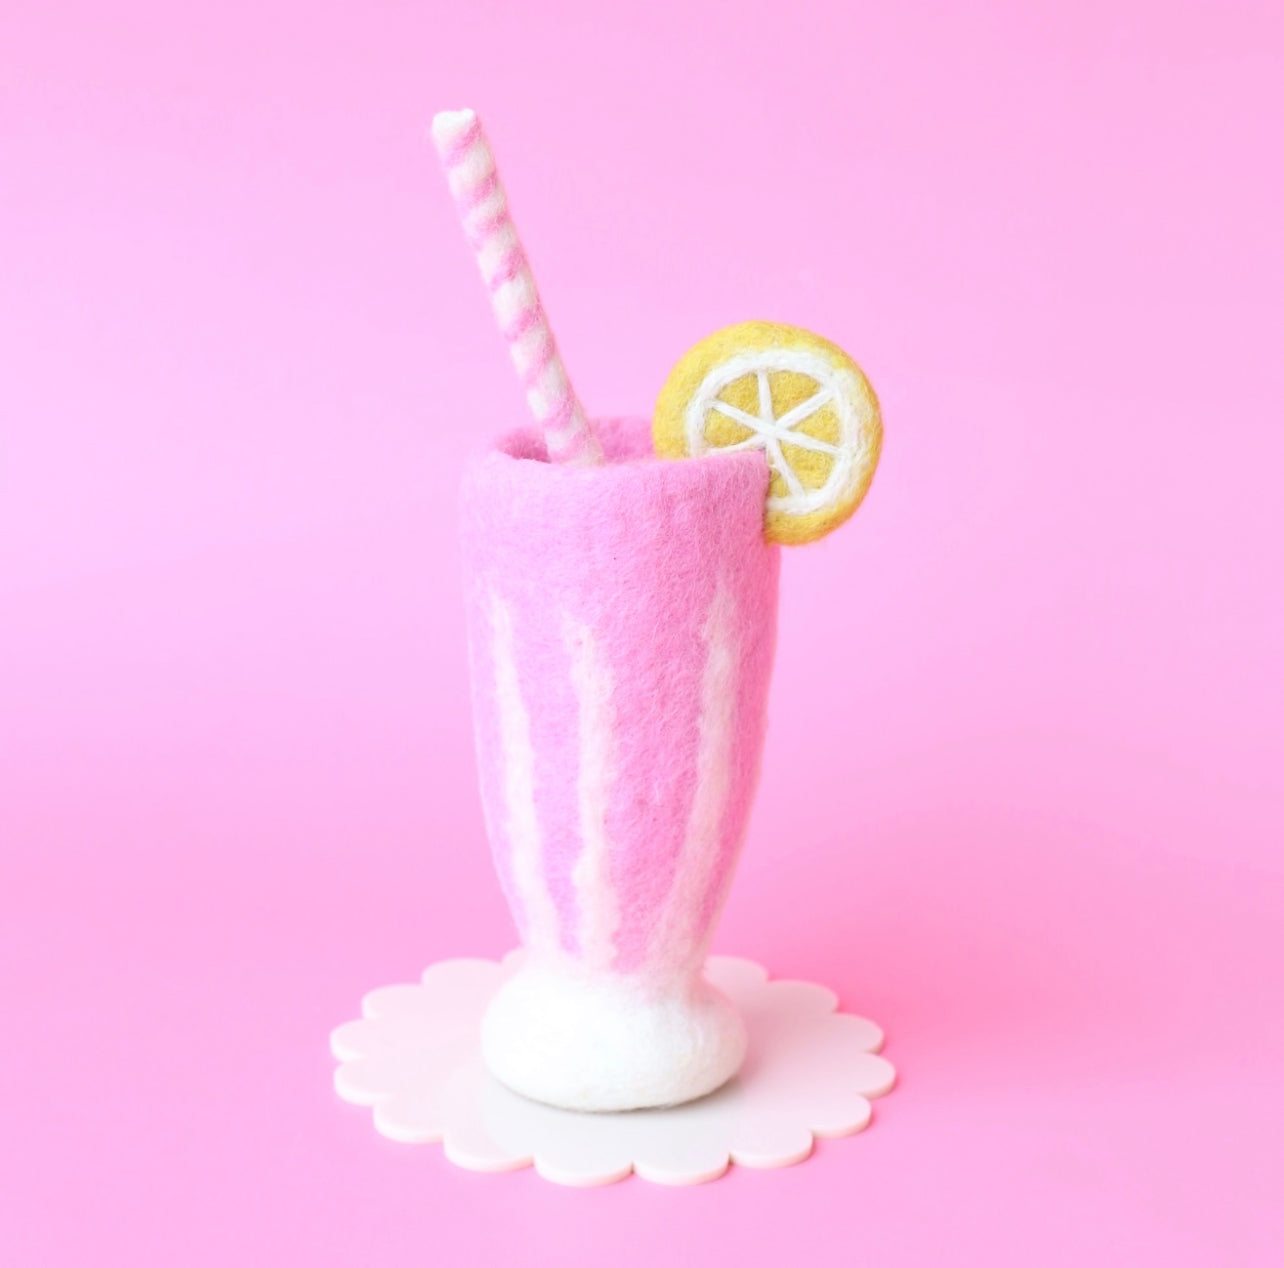 Classic and pink lemonade singles